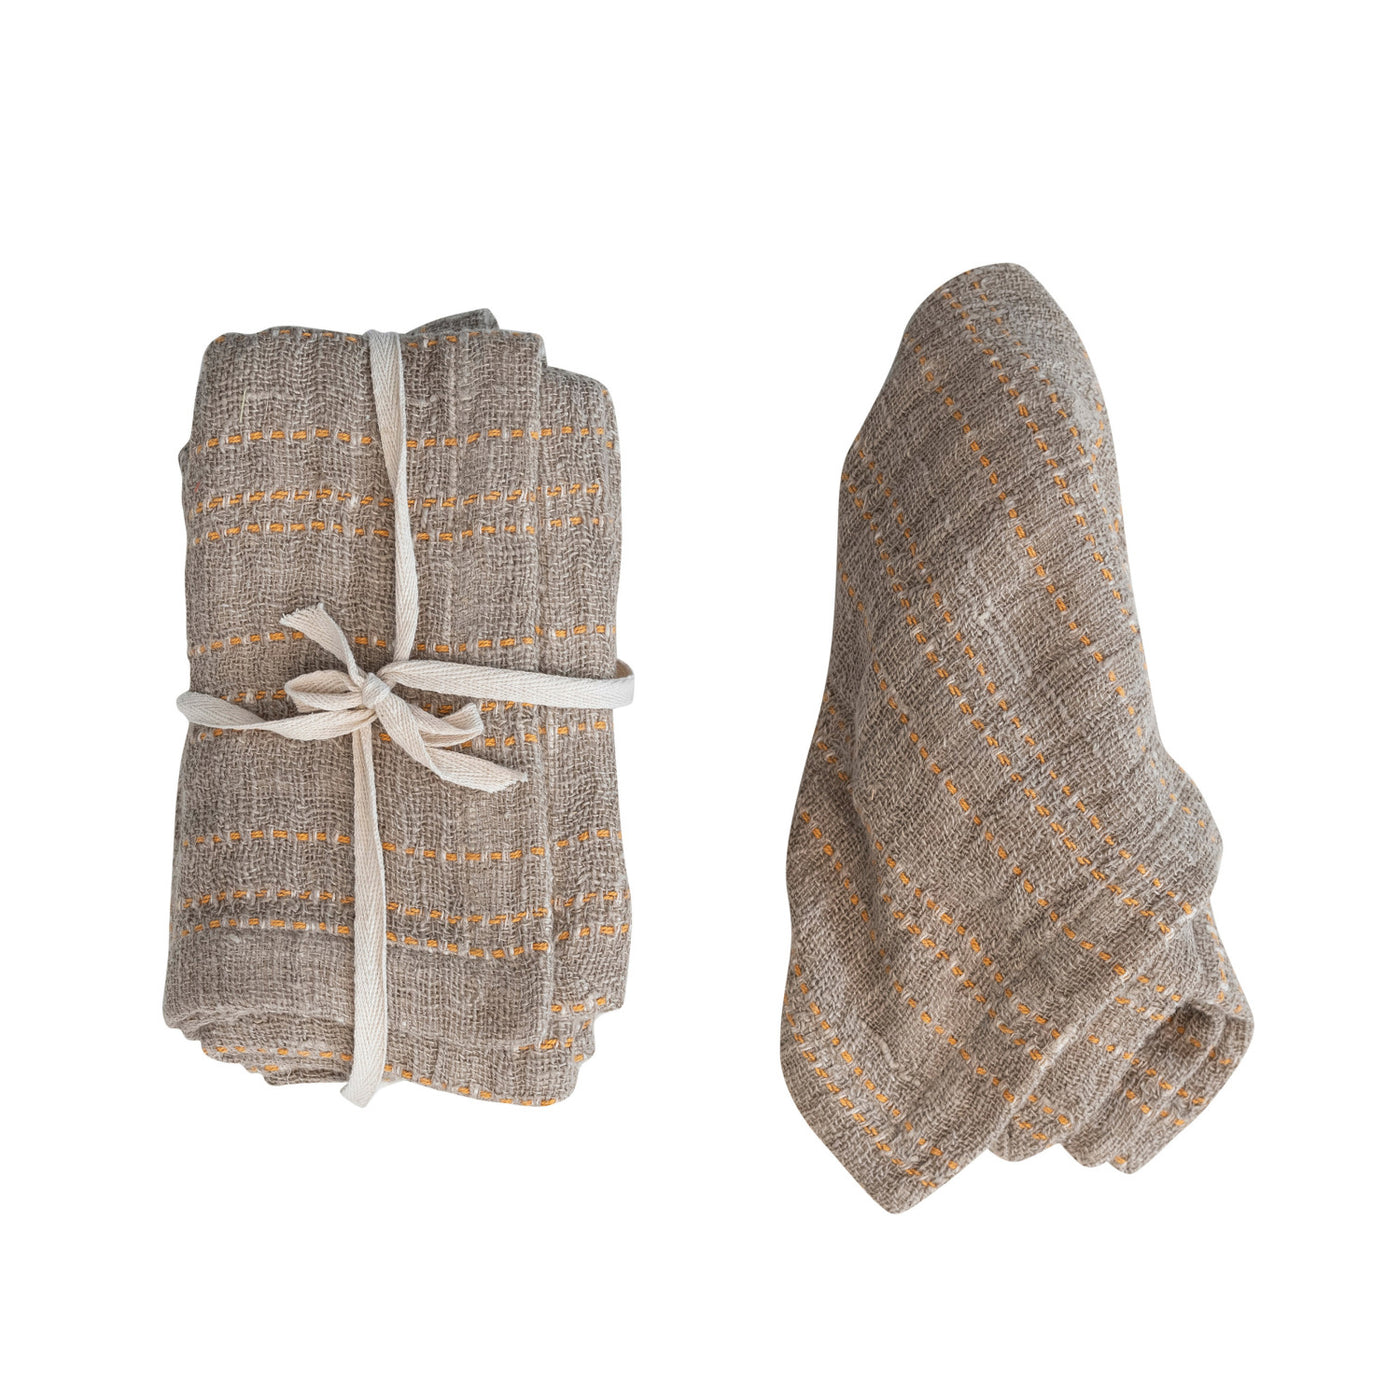 18" Square Woven Cotton & Linen Napkins